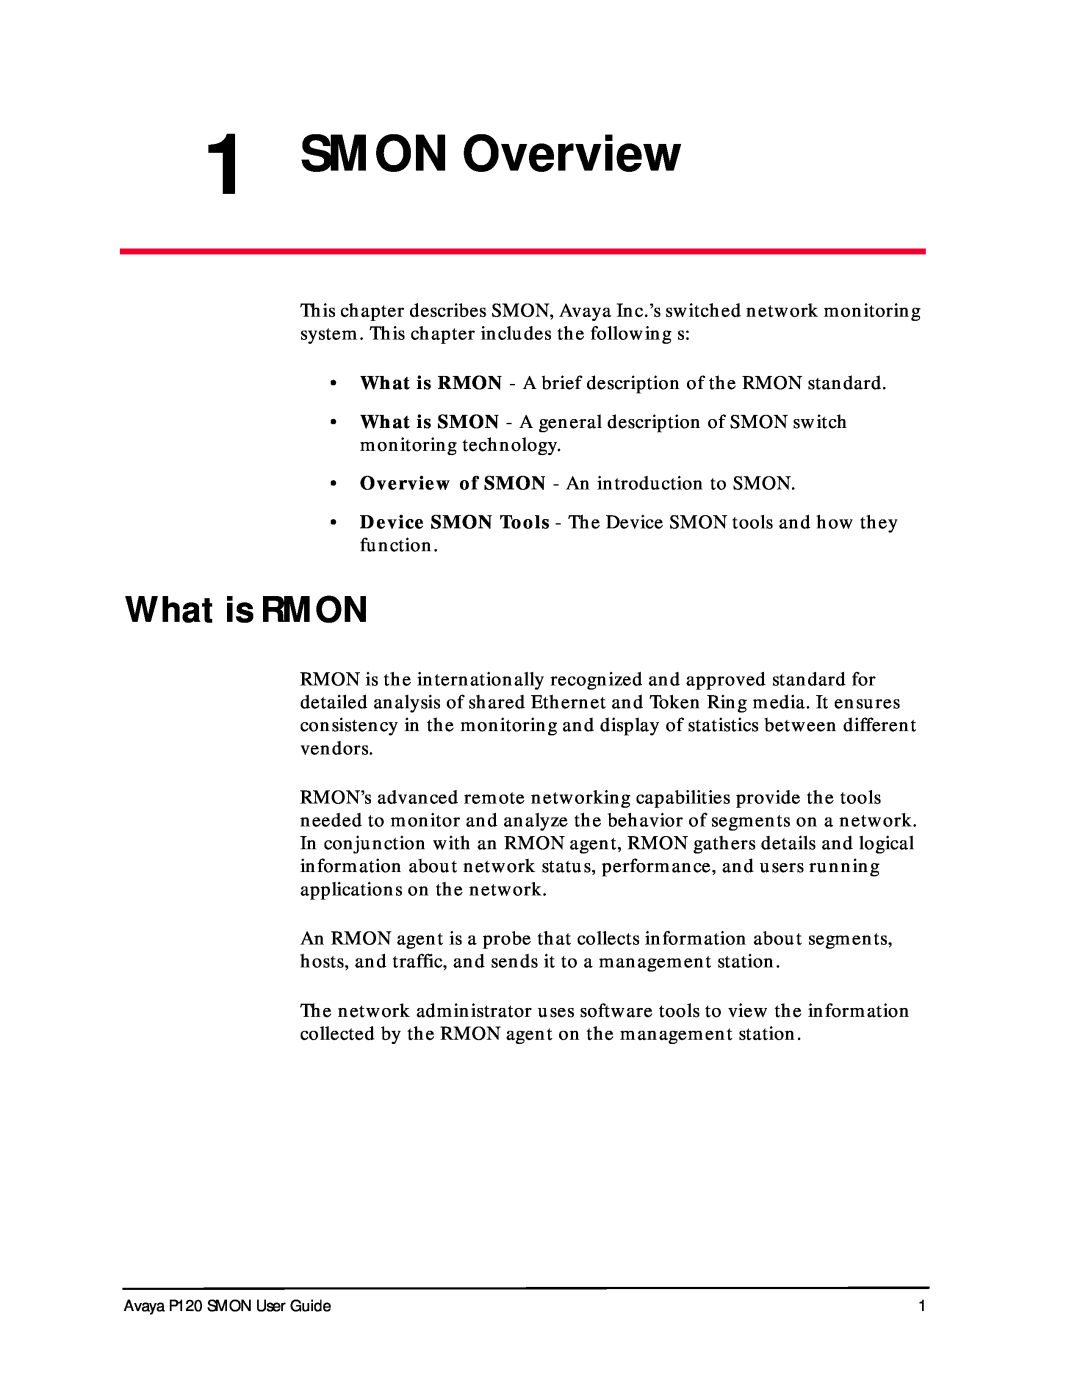 Avaya P120 SMON manual SMON Overview, What is RMON 